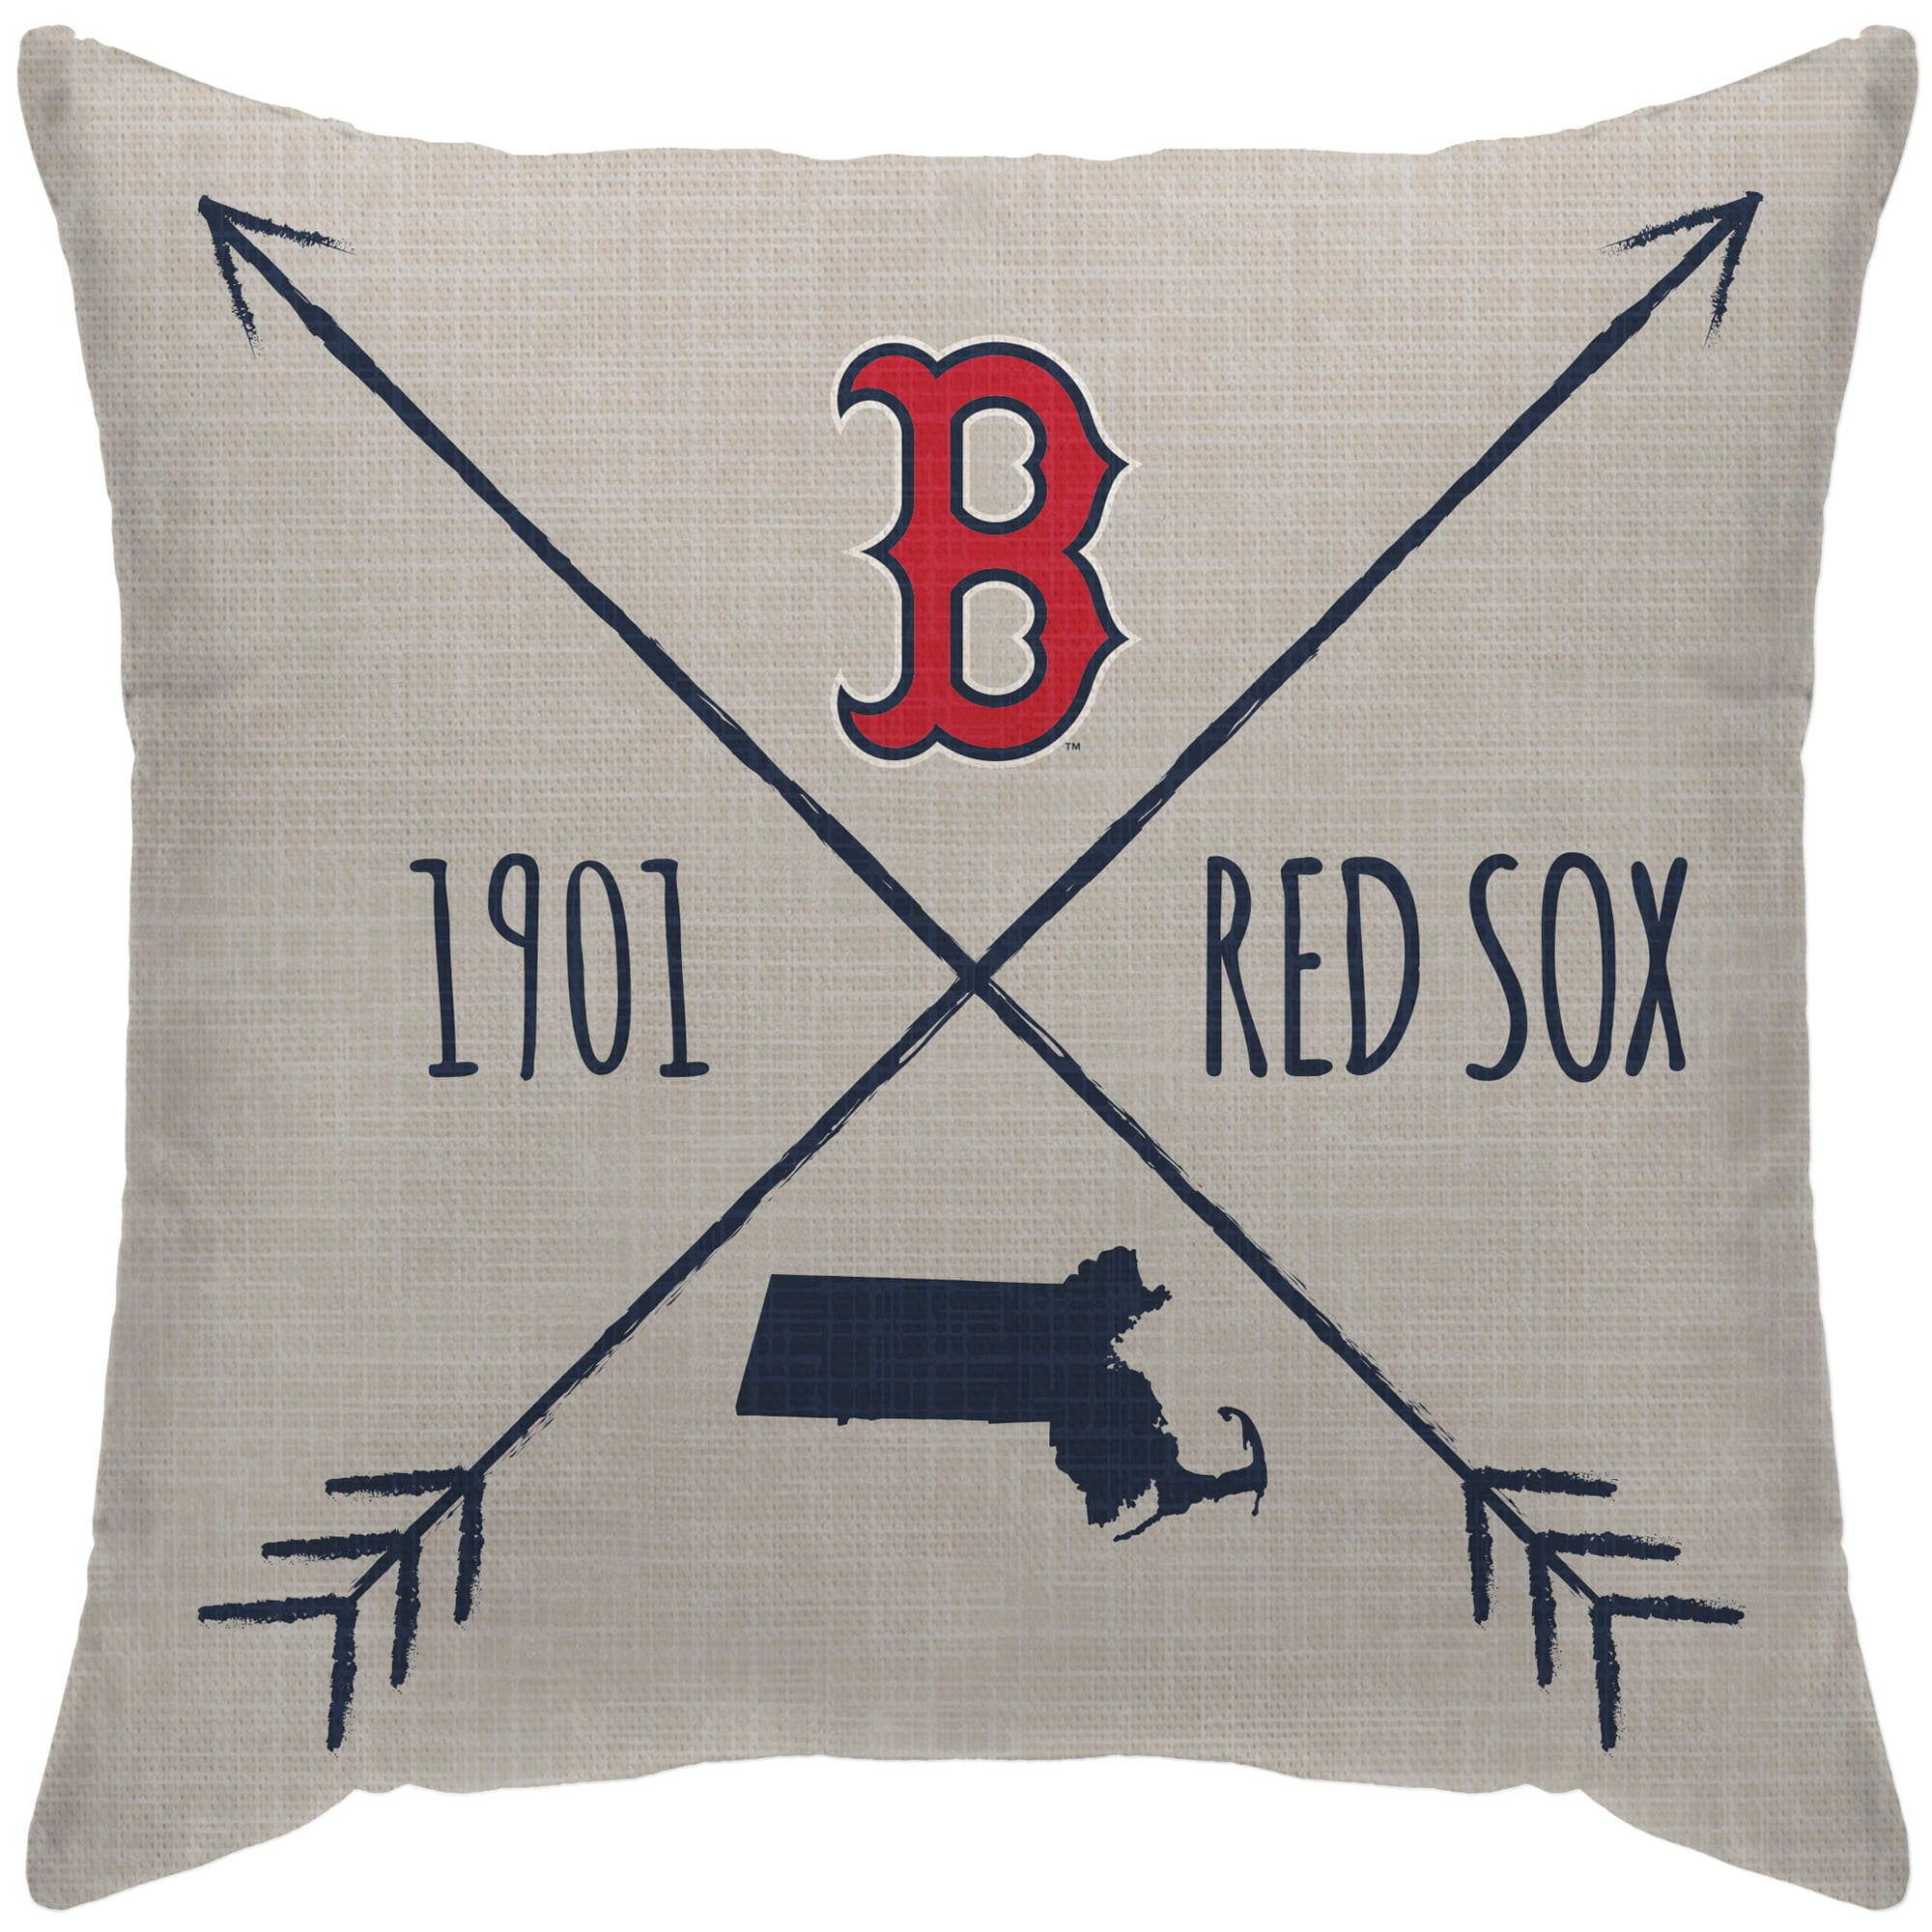 Vintage Baseball MLB Red Sox 1901 Shirt - Ink In Action